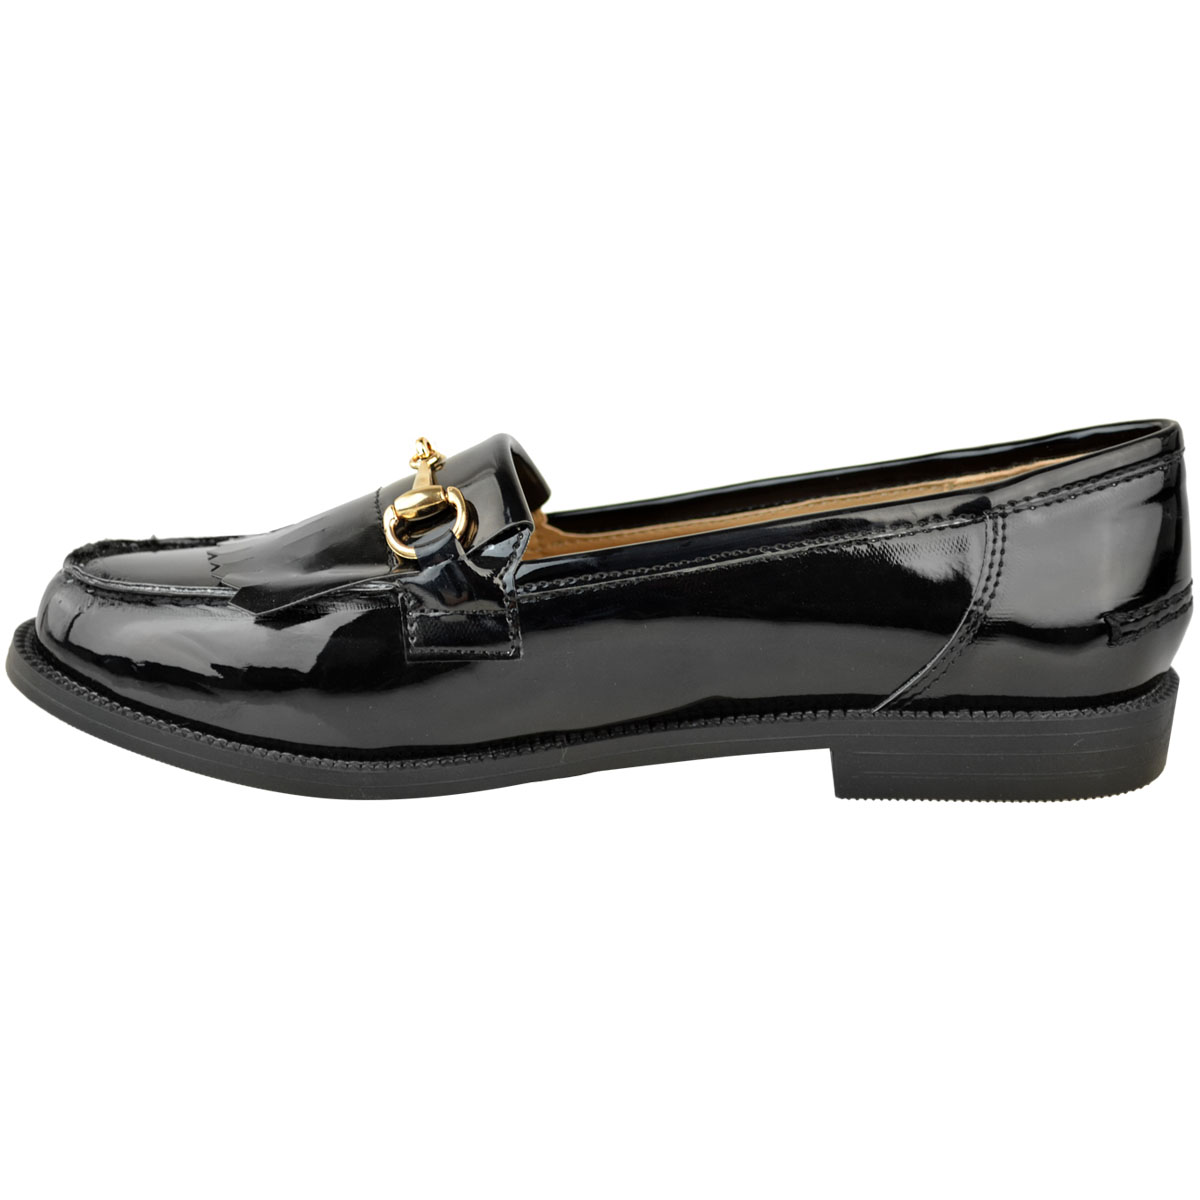 Womens Ladies Flat Loafers Casual Black Fringe Tassel Work School Pumps Shoes 